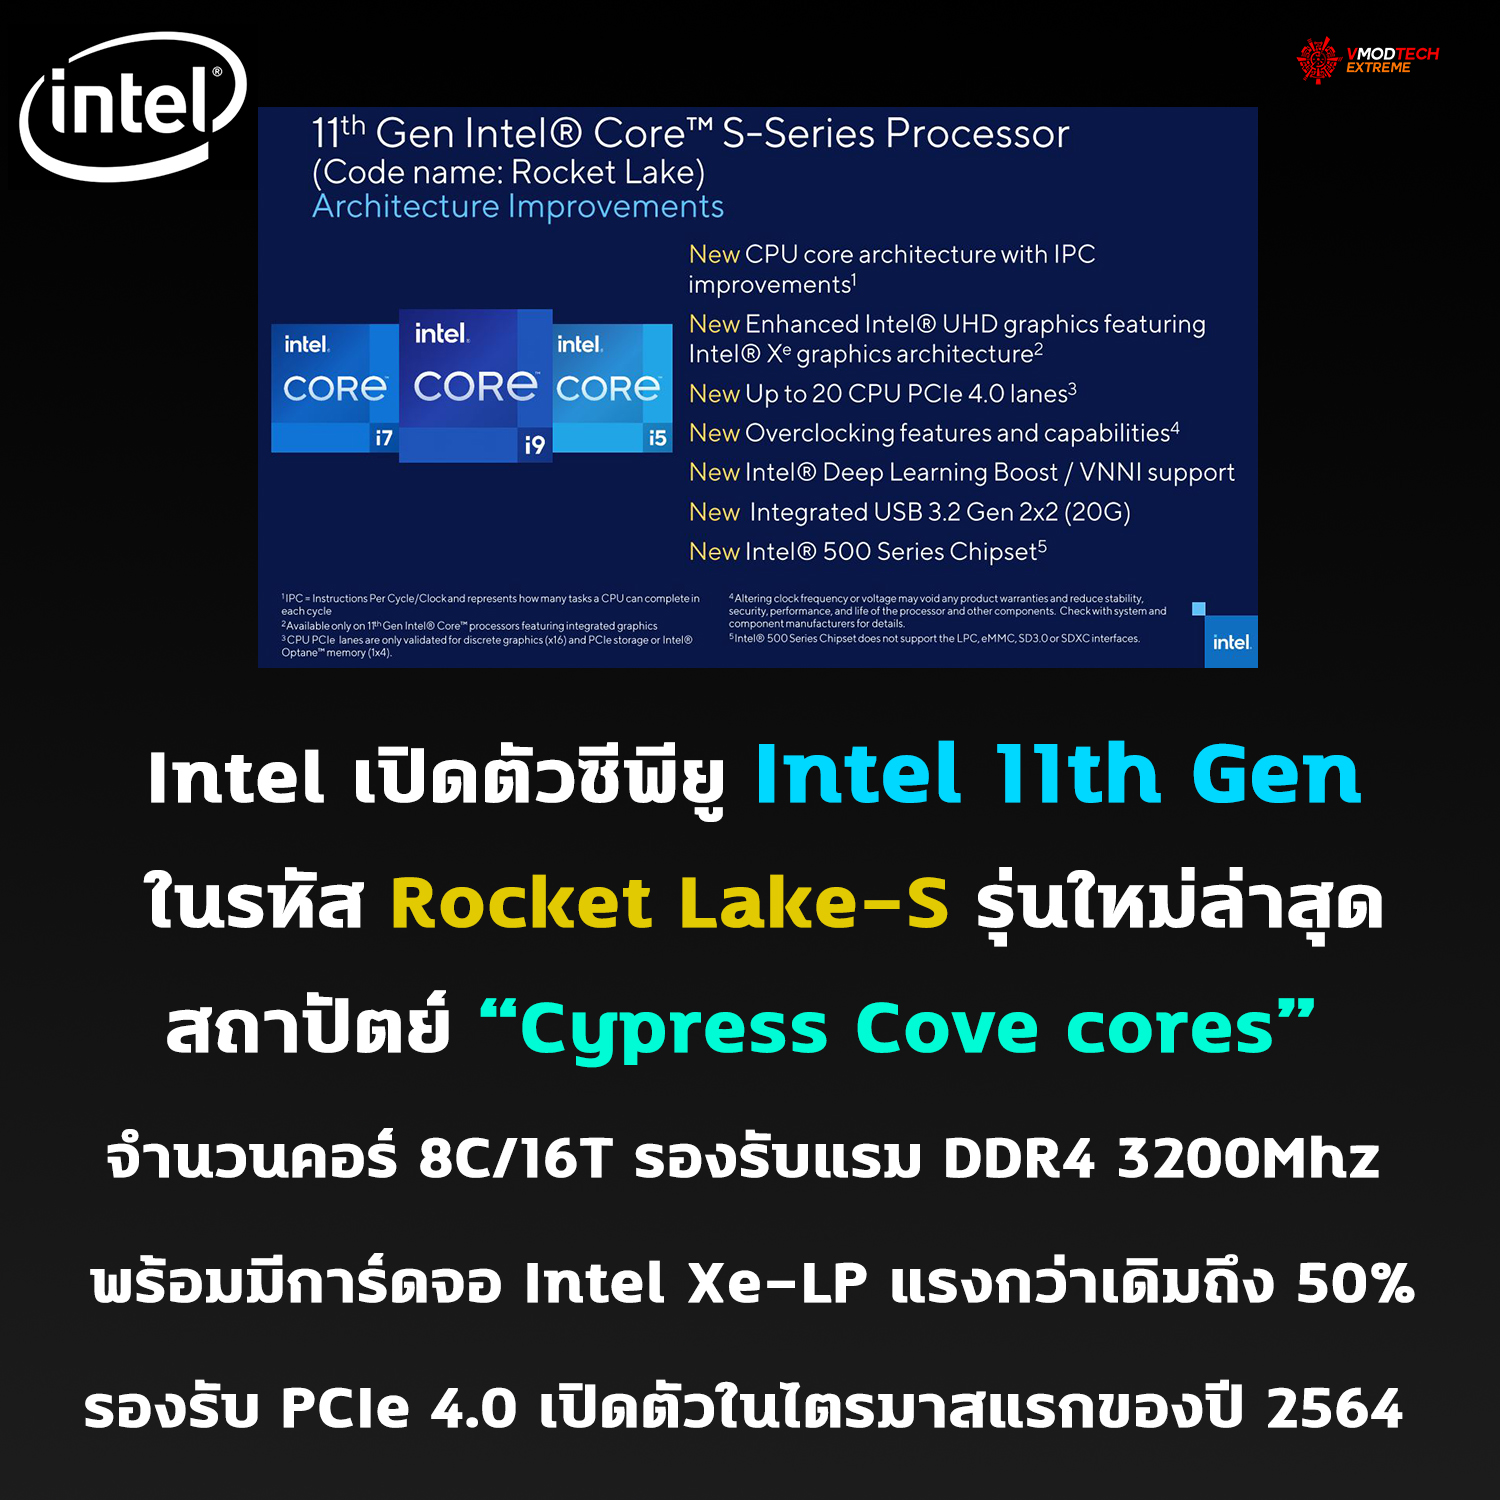 intel 11th gen rocket lake s cypress cove cores Intel เปิดตัวซีพียู Intel 11th Gen ในรหัส Rocket Lake S รุ่นใหม่ล่าสุดที่มาพร้อมสถาปัตย์ Cypress Cove cores 